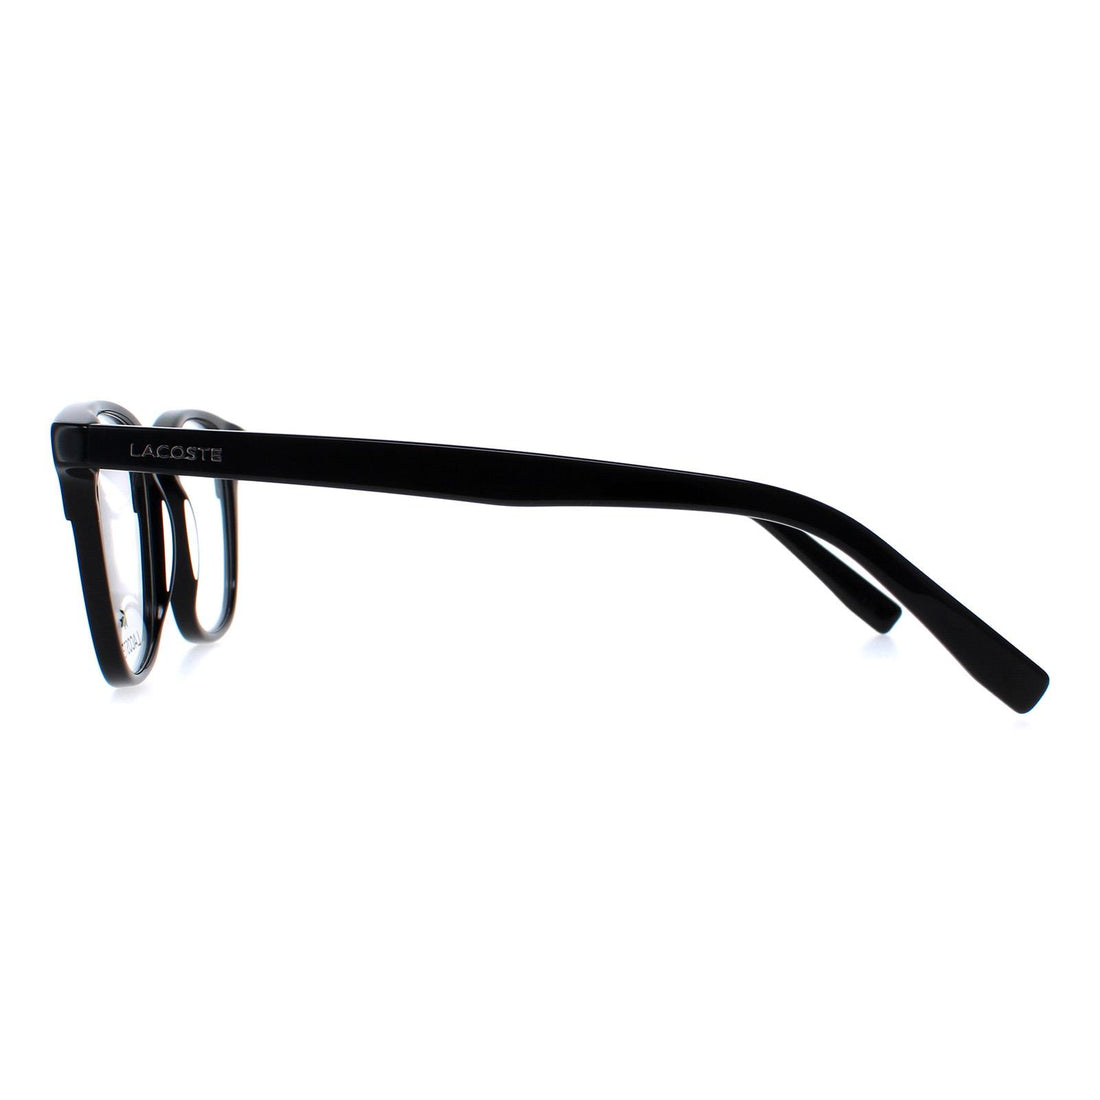 Lacoste Glasses Frames L2832 001 Black Men Women